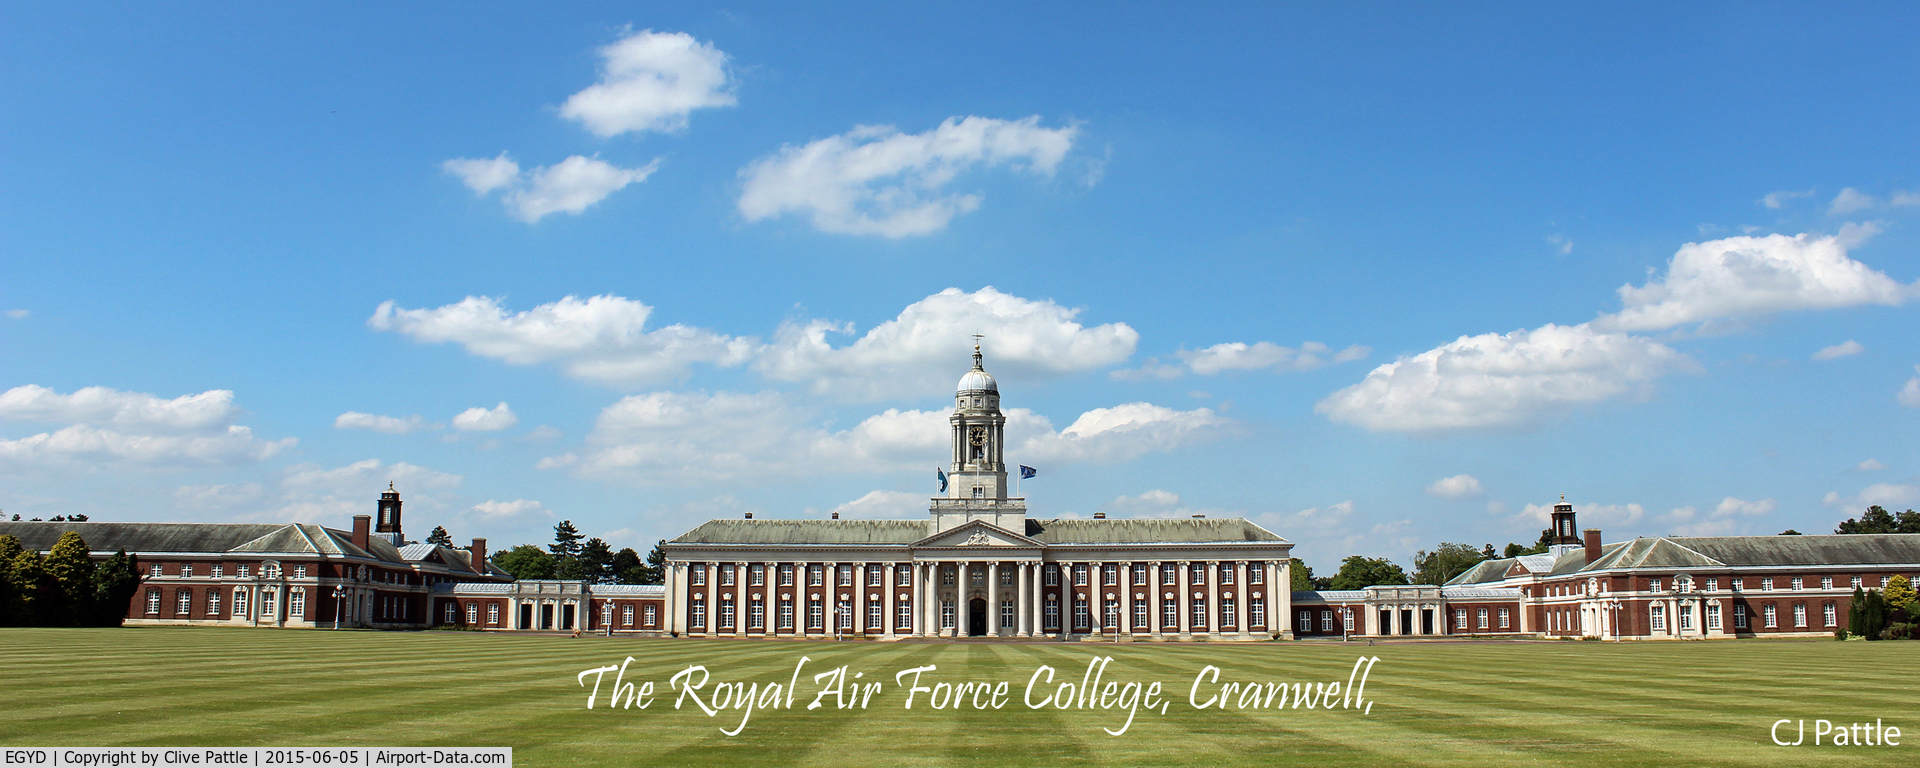 RAF Cranwell Airport, Cranwell, England United Kingdom (EGYD) - The Royal Air Force College at Cranwell